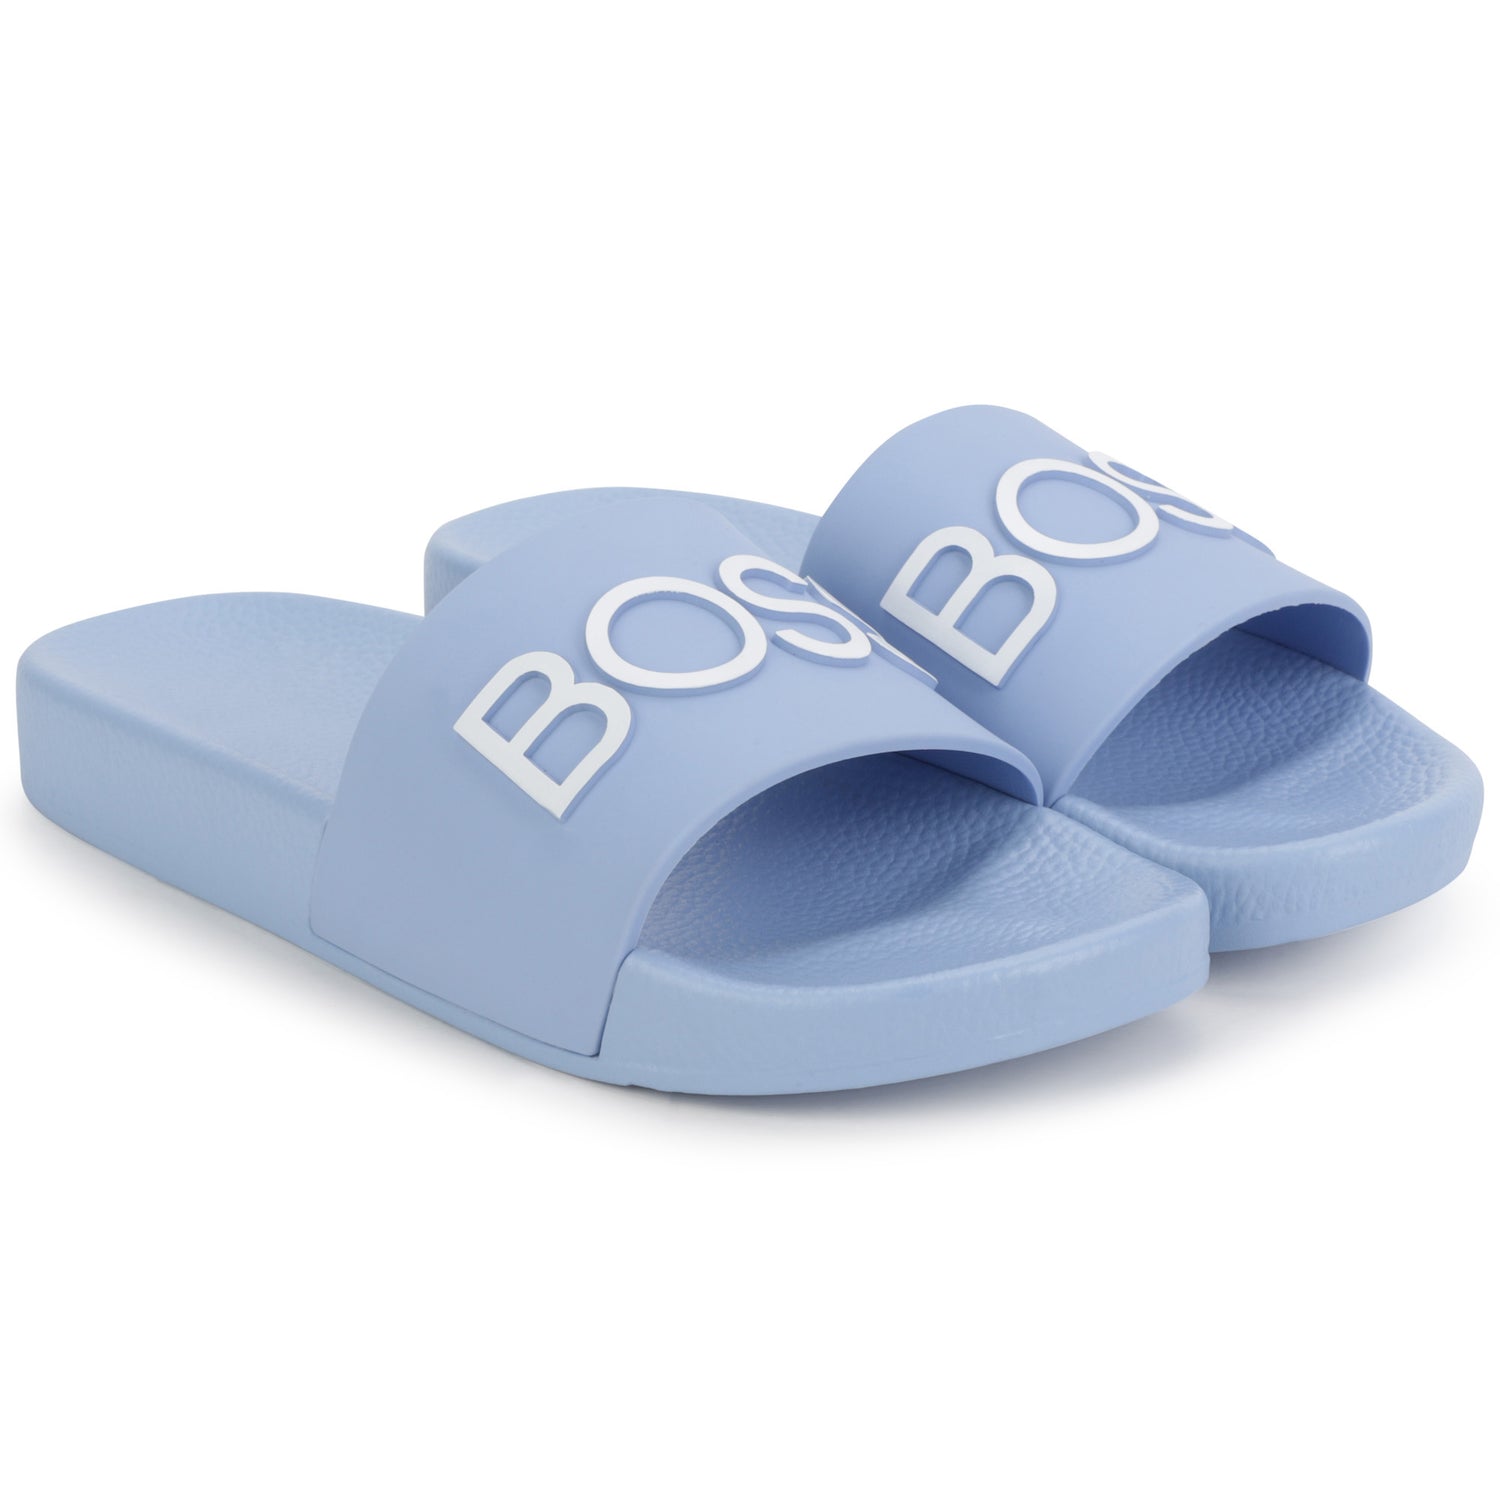 Hugo Boss Aqua Slides Style: J29325